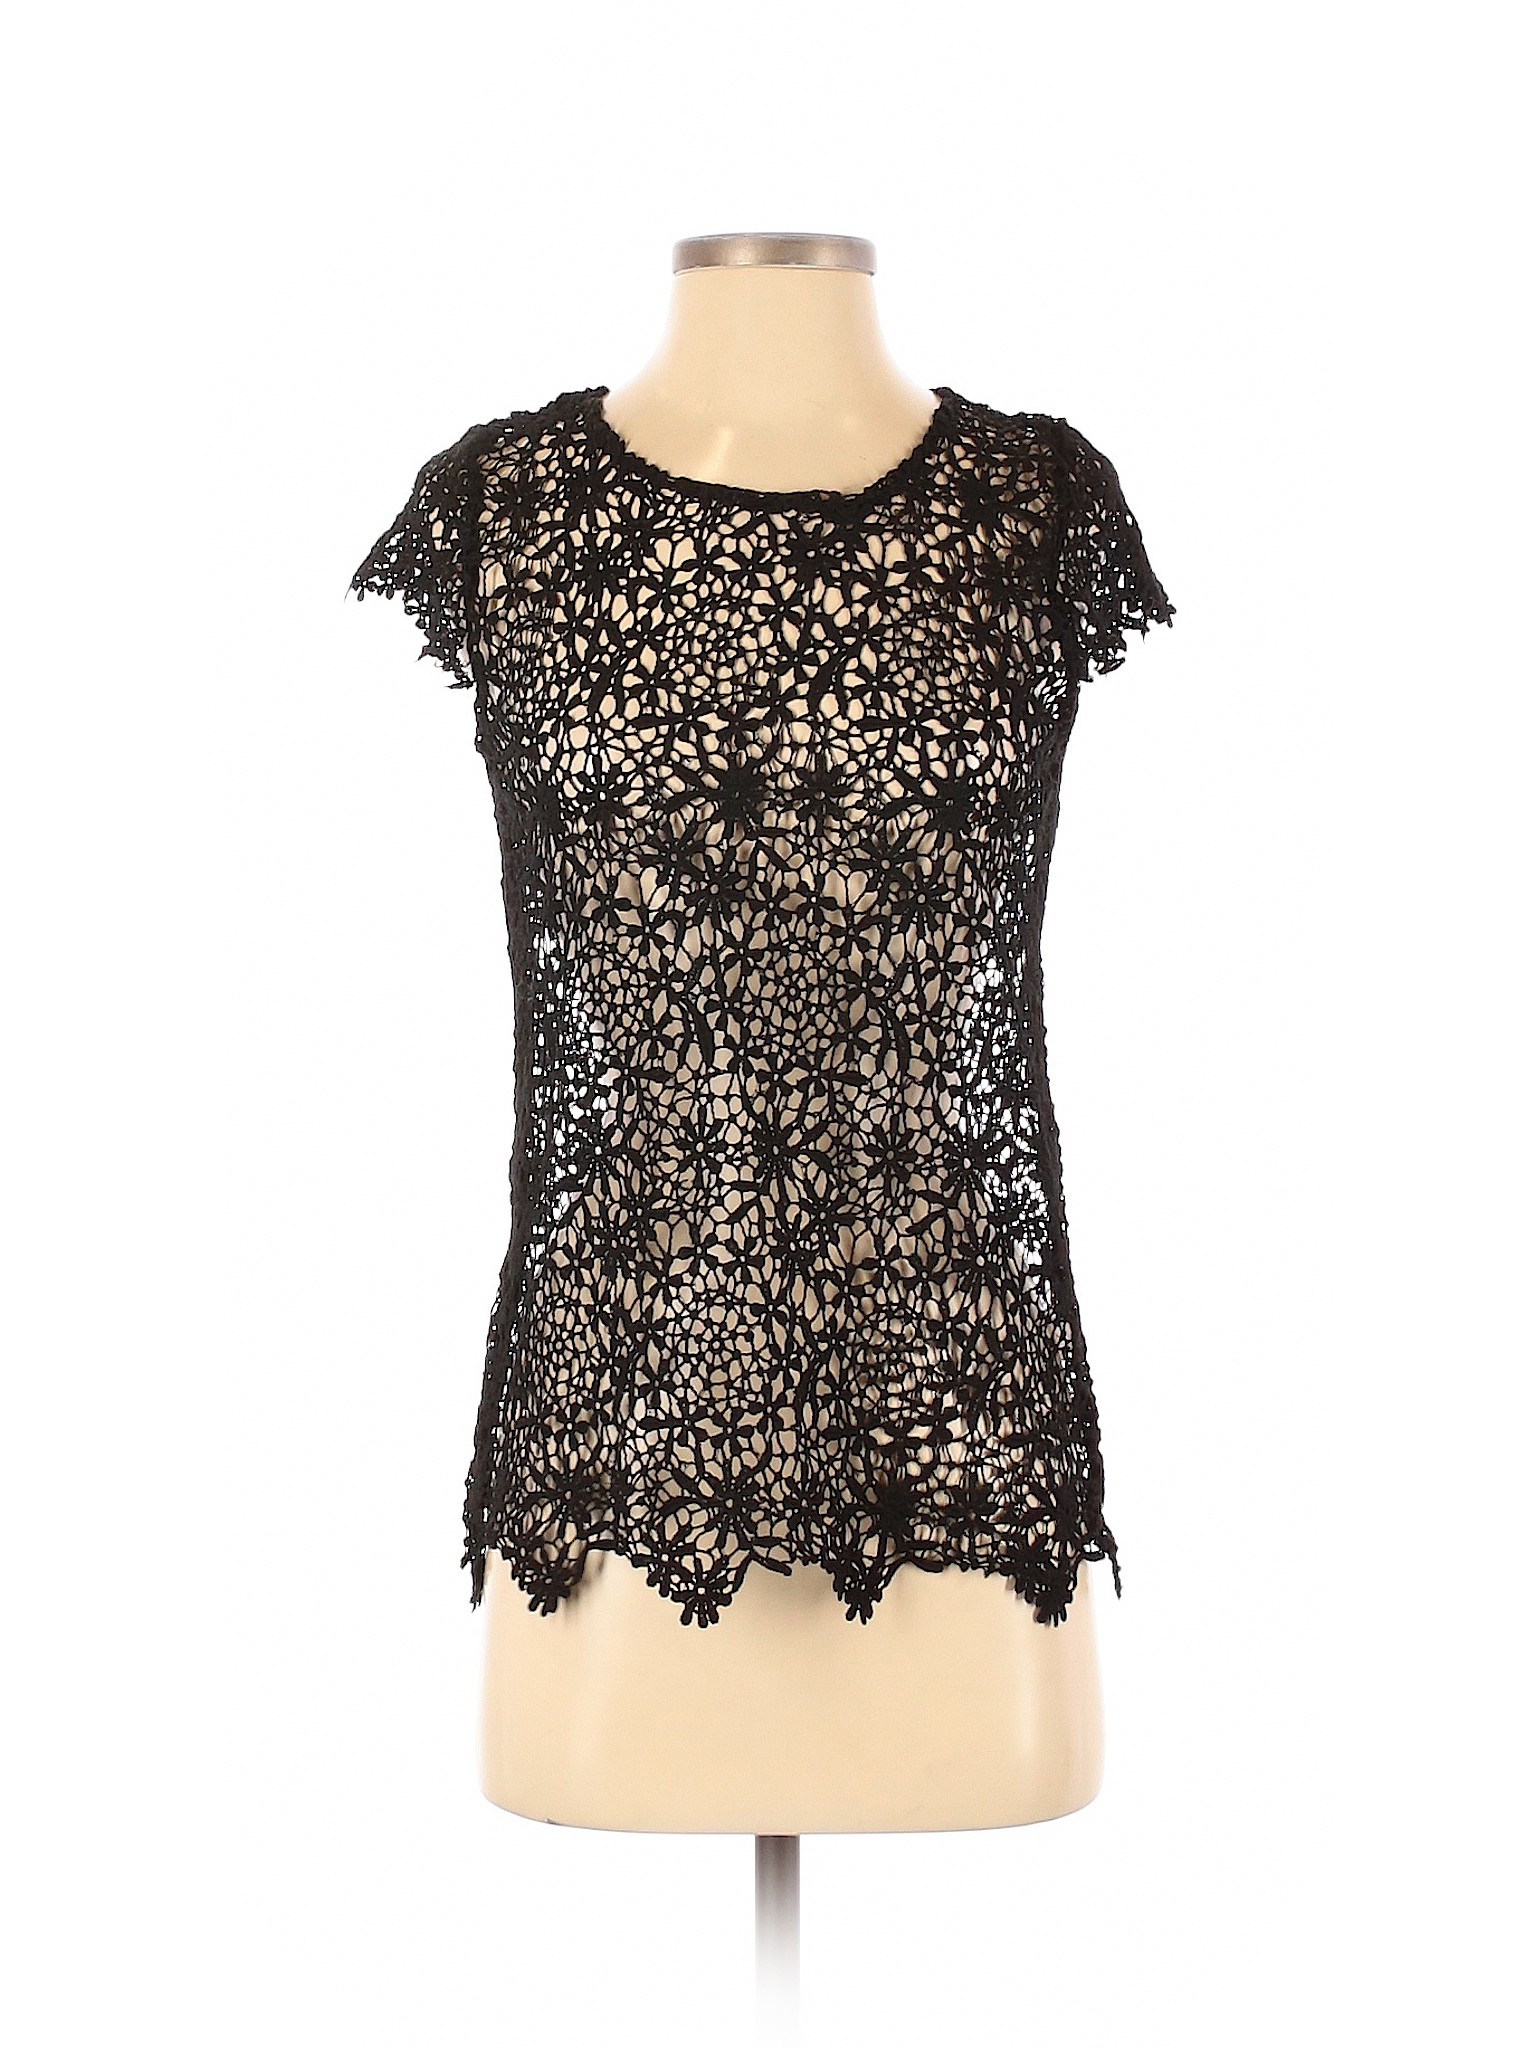 Vila Women Black Short Sleeve Top S | eBay